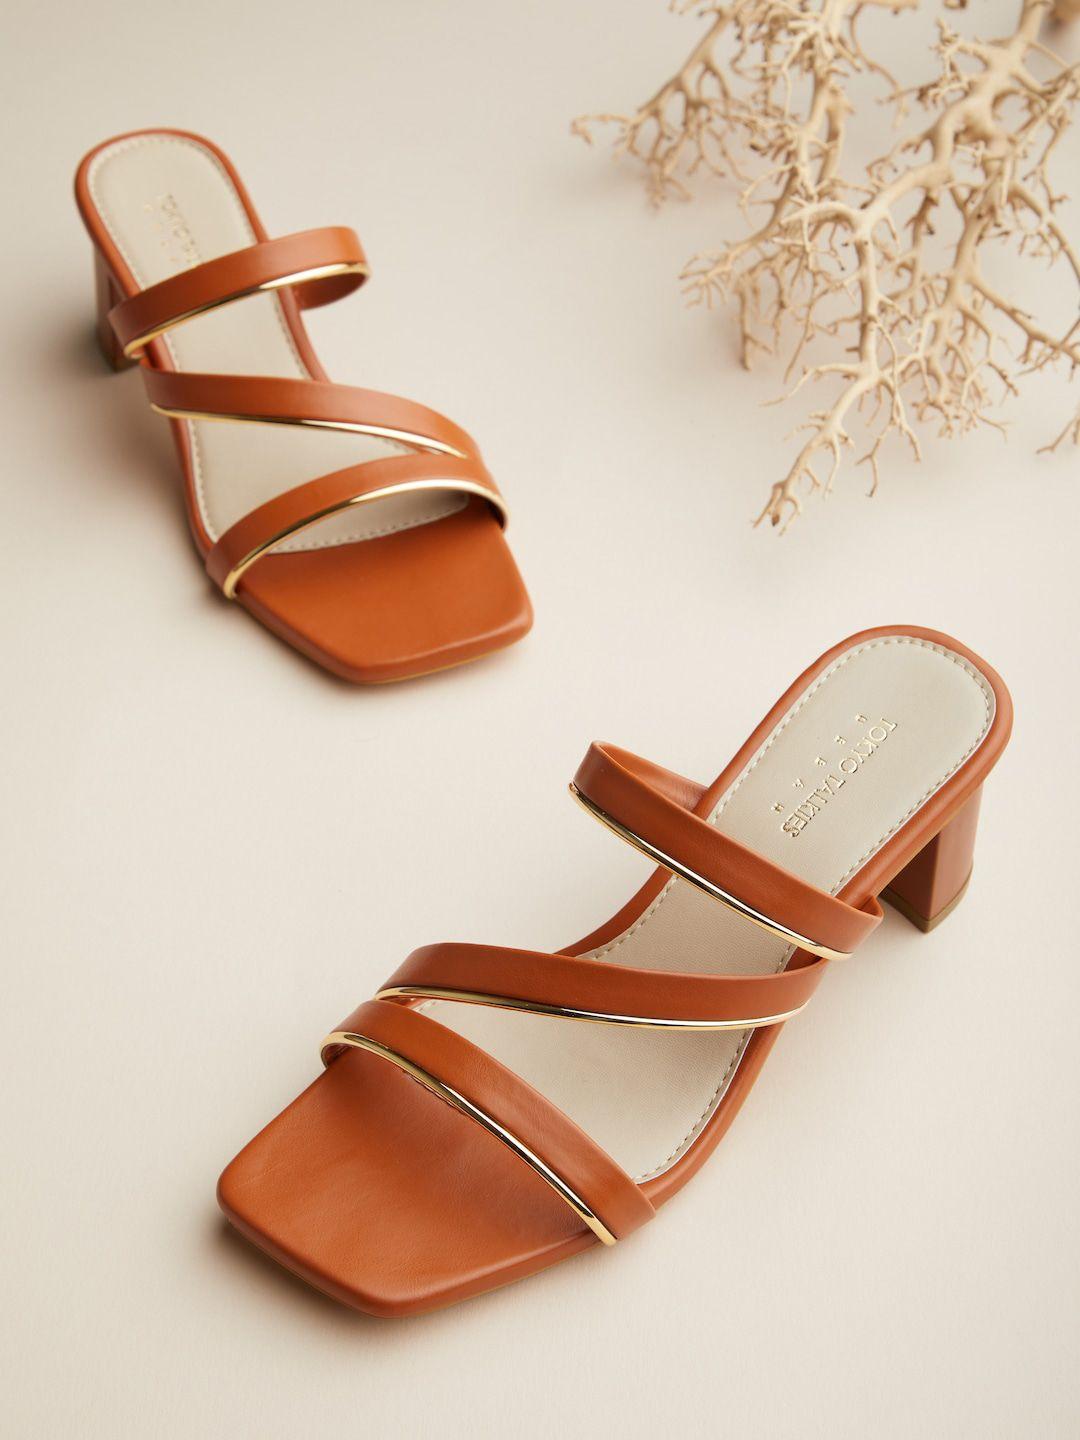 tokyo-talkies-tan-&-beige-colourblocked-block-sandals